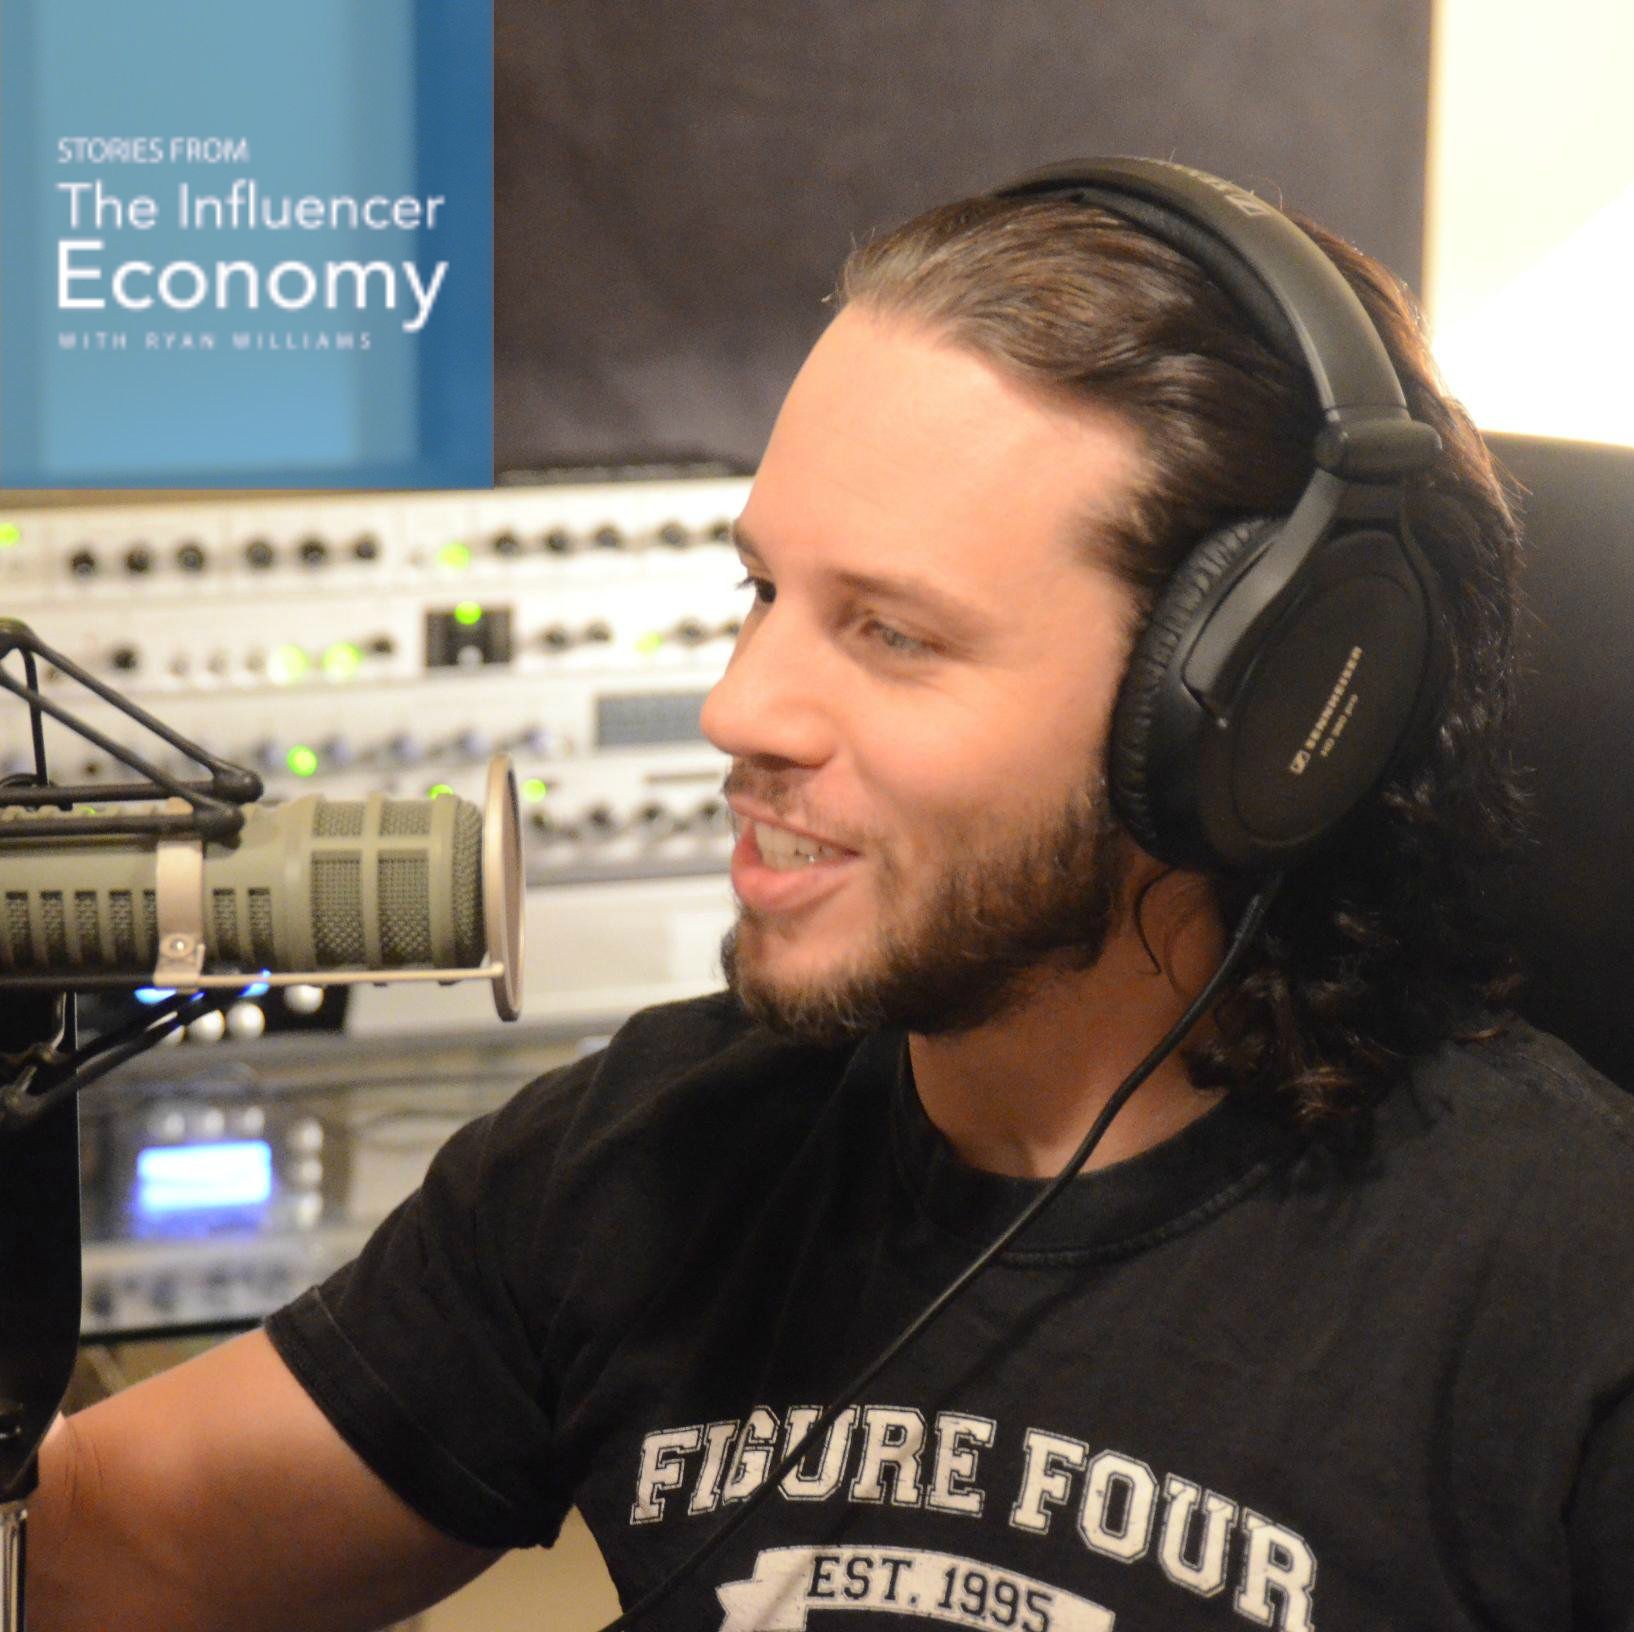 bryan_alvarez with Ryan Williams on The Influencer Economy